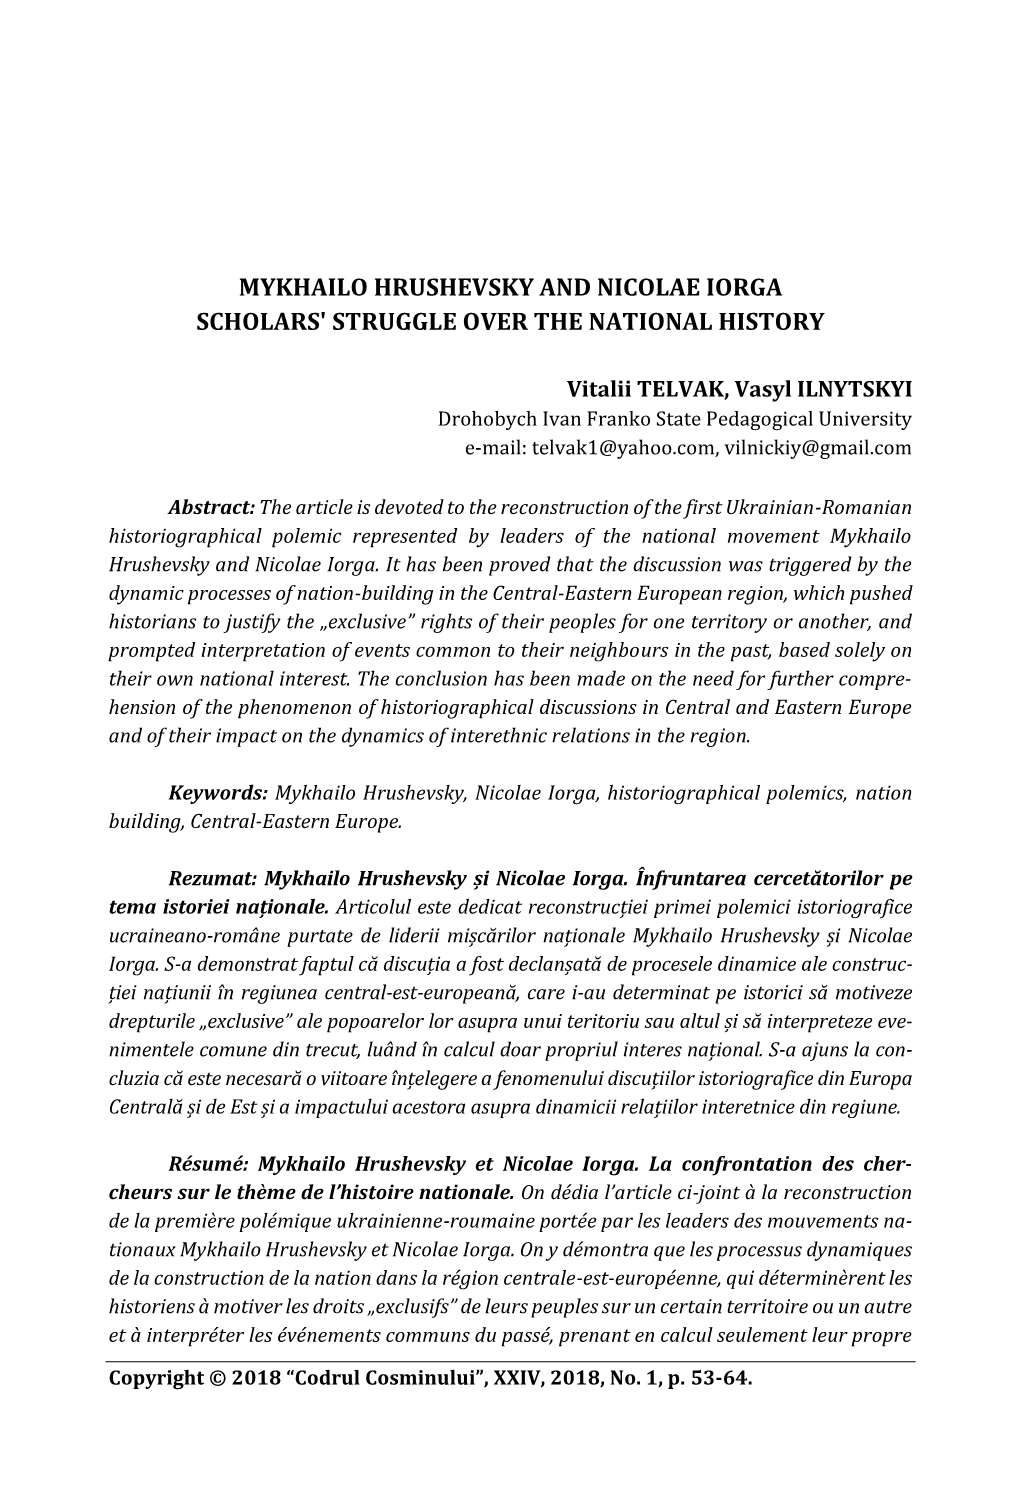 Nicolae Iorga and Mykhailo Hrushevsky Scholars' Struggle Over